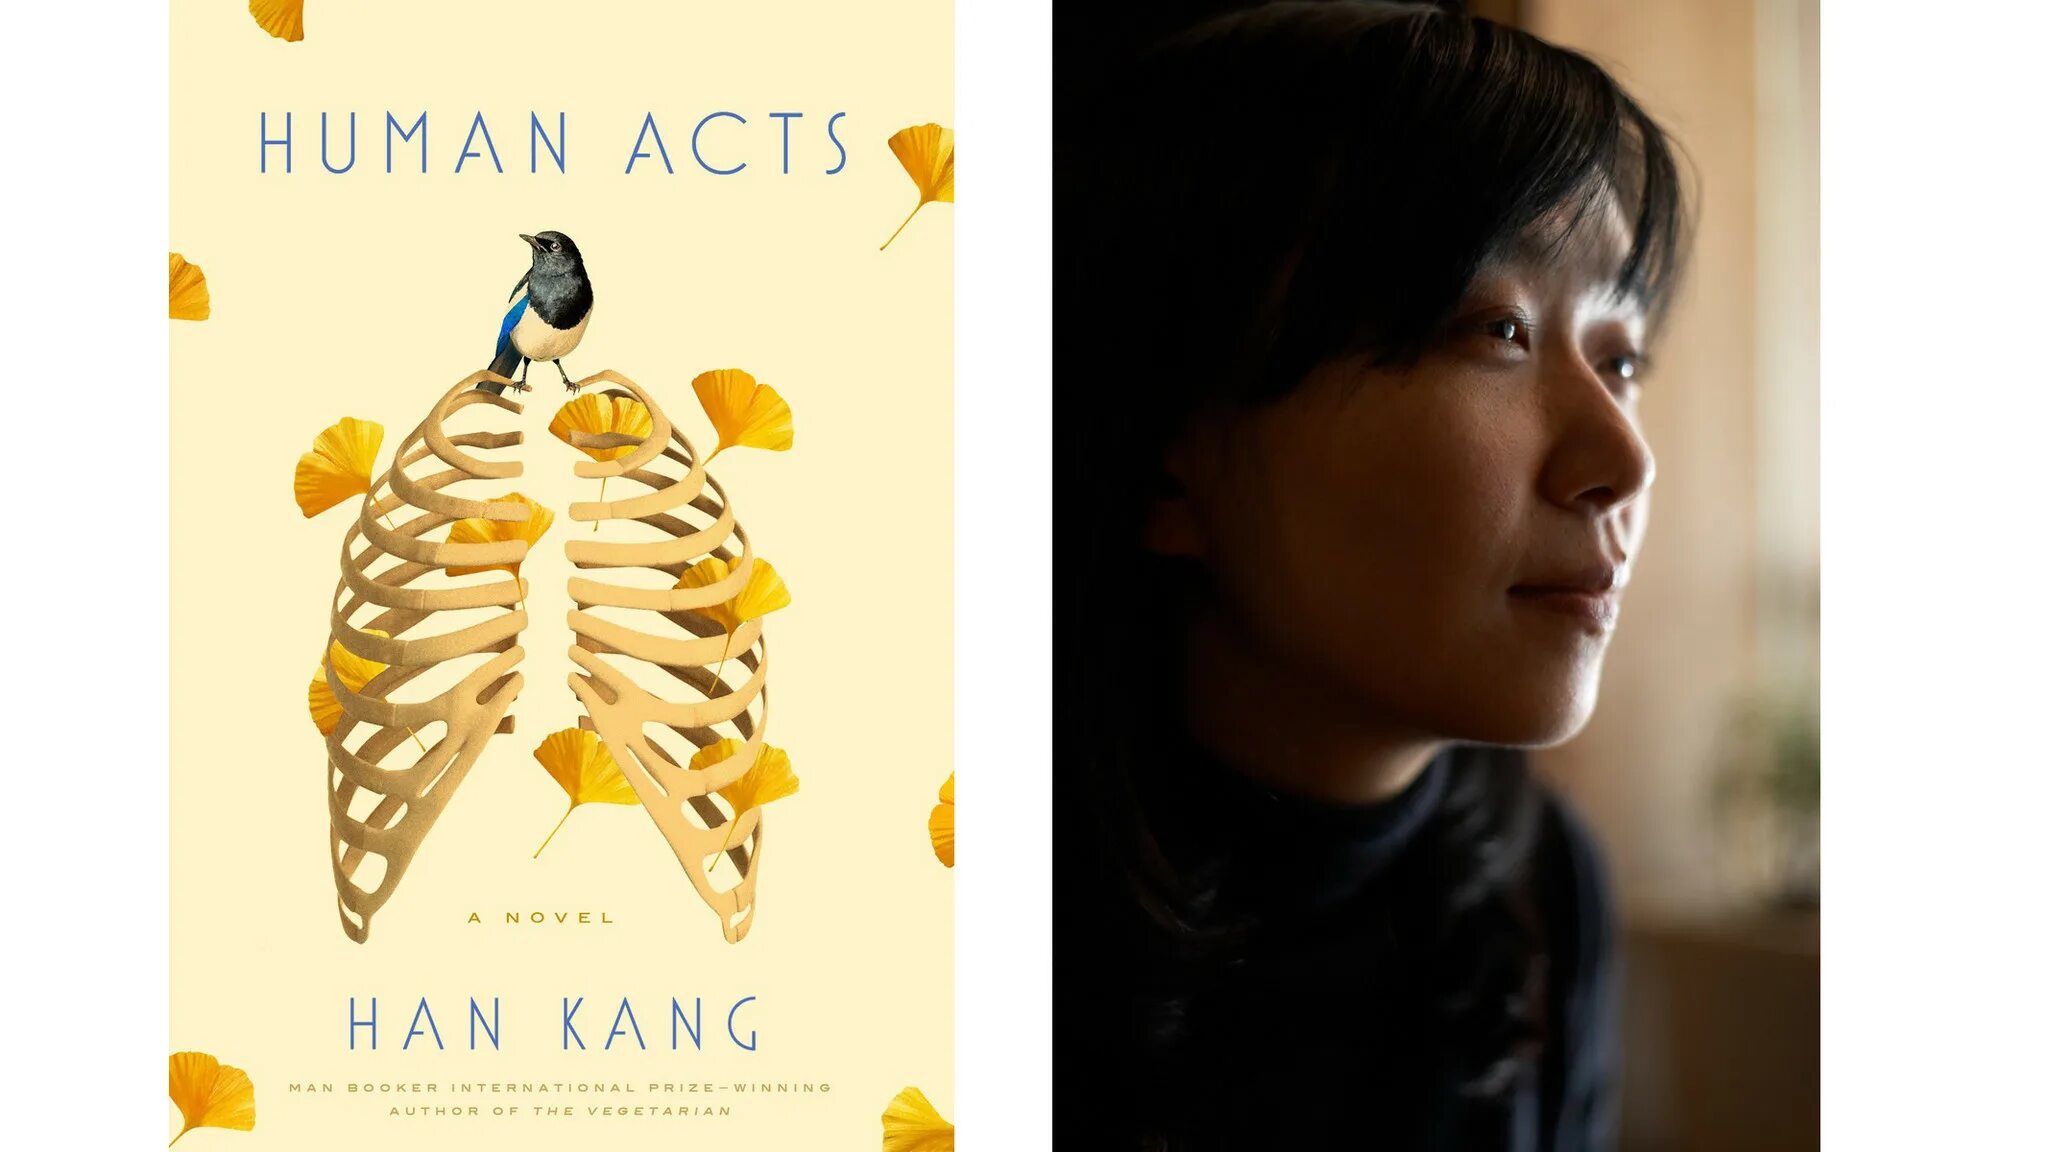 Kang Han "Human Acts". Хан Ган "вегетарианка". Вегетарианка книга. Хан Ган вегетарианка книга.